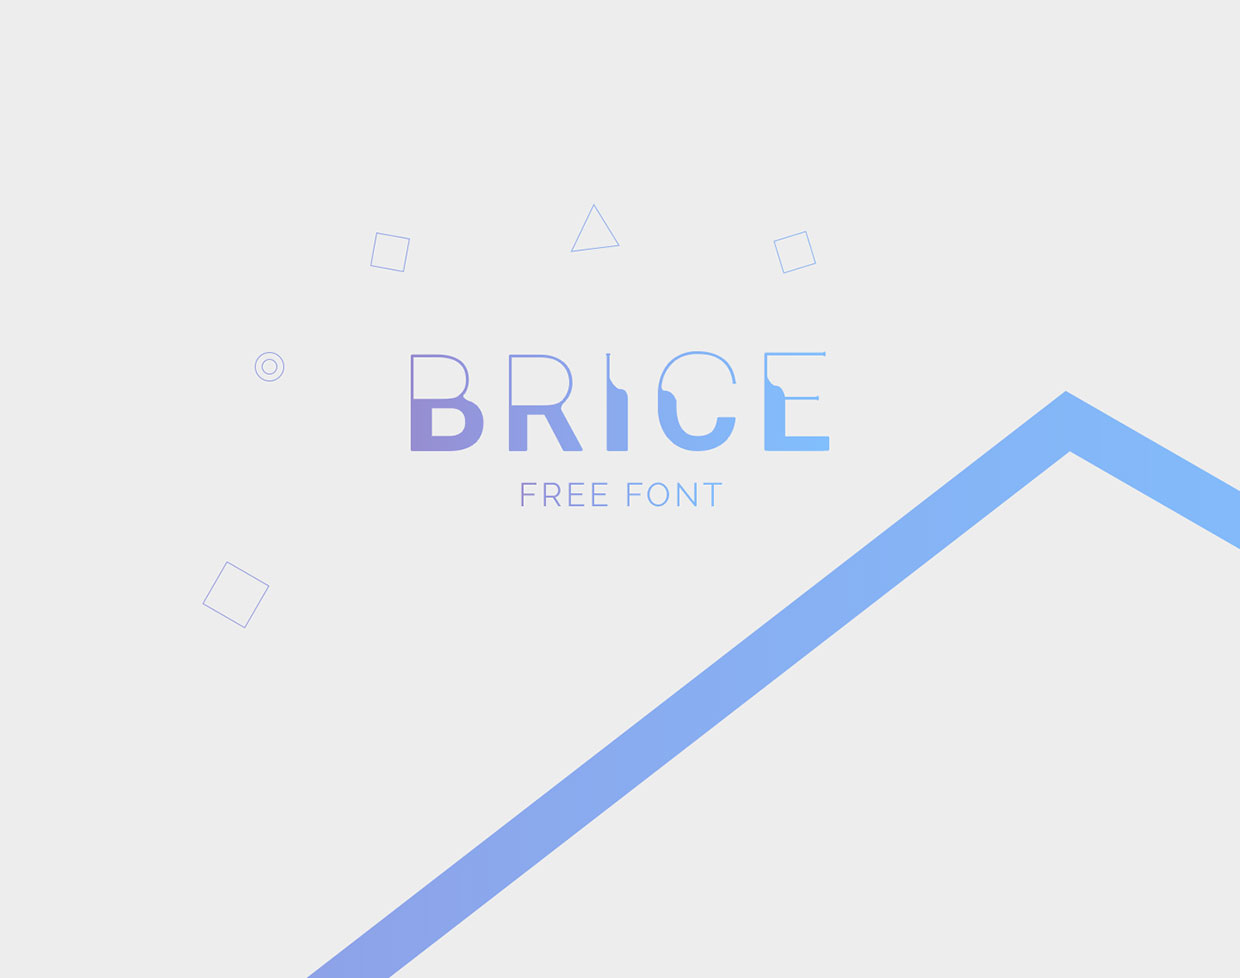 brice-best-free-logo-fonts-100